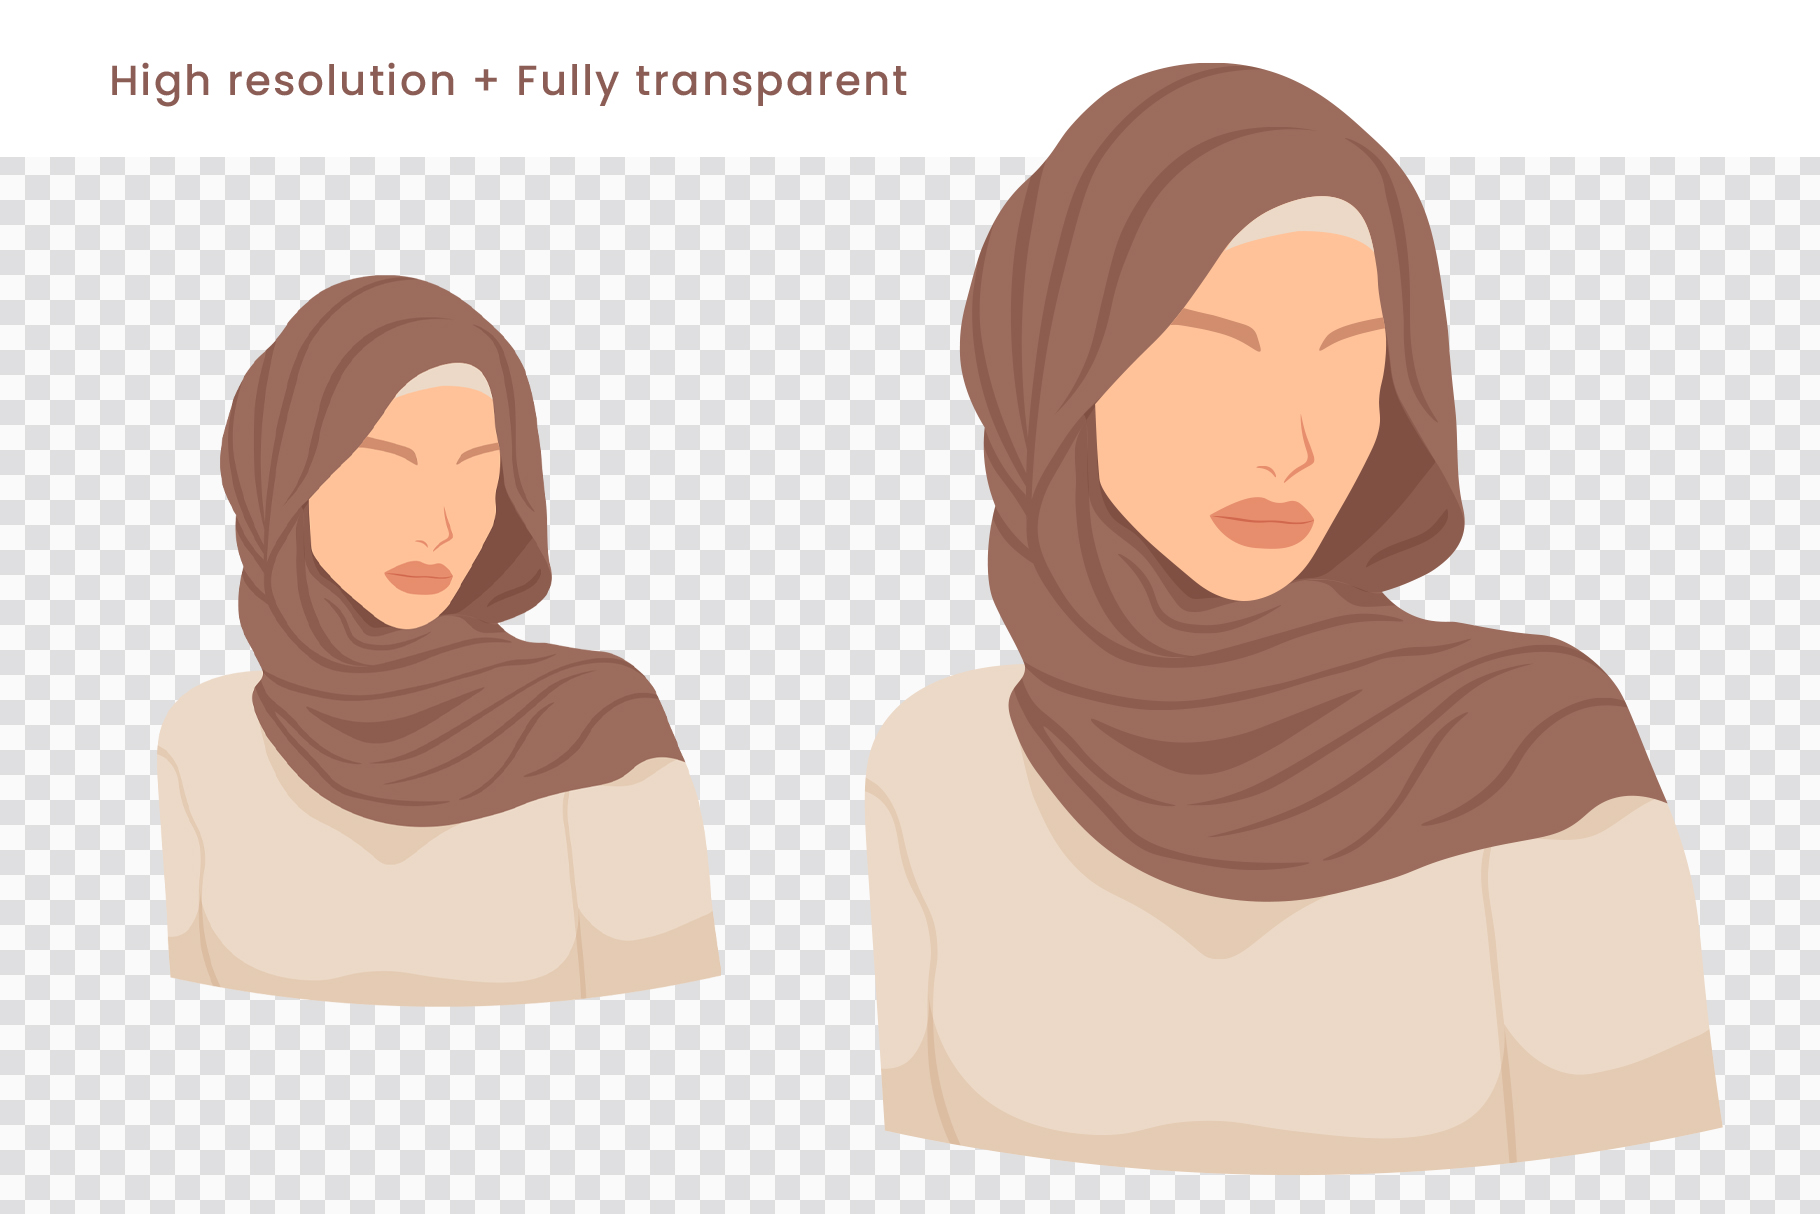 Hijab Women Illustration Set (AI, EPS, PNG Format)